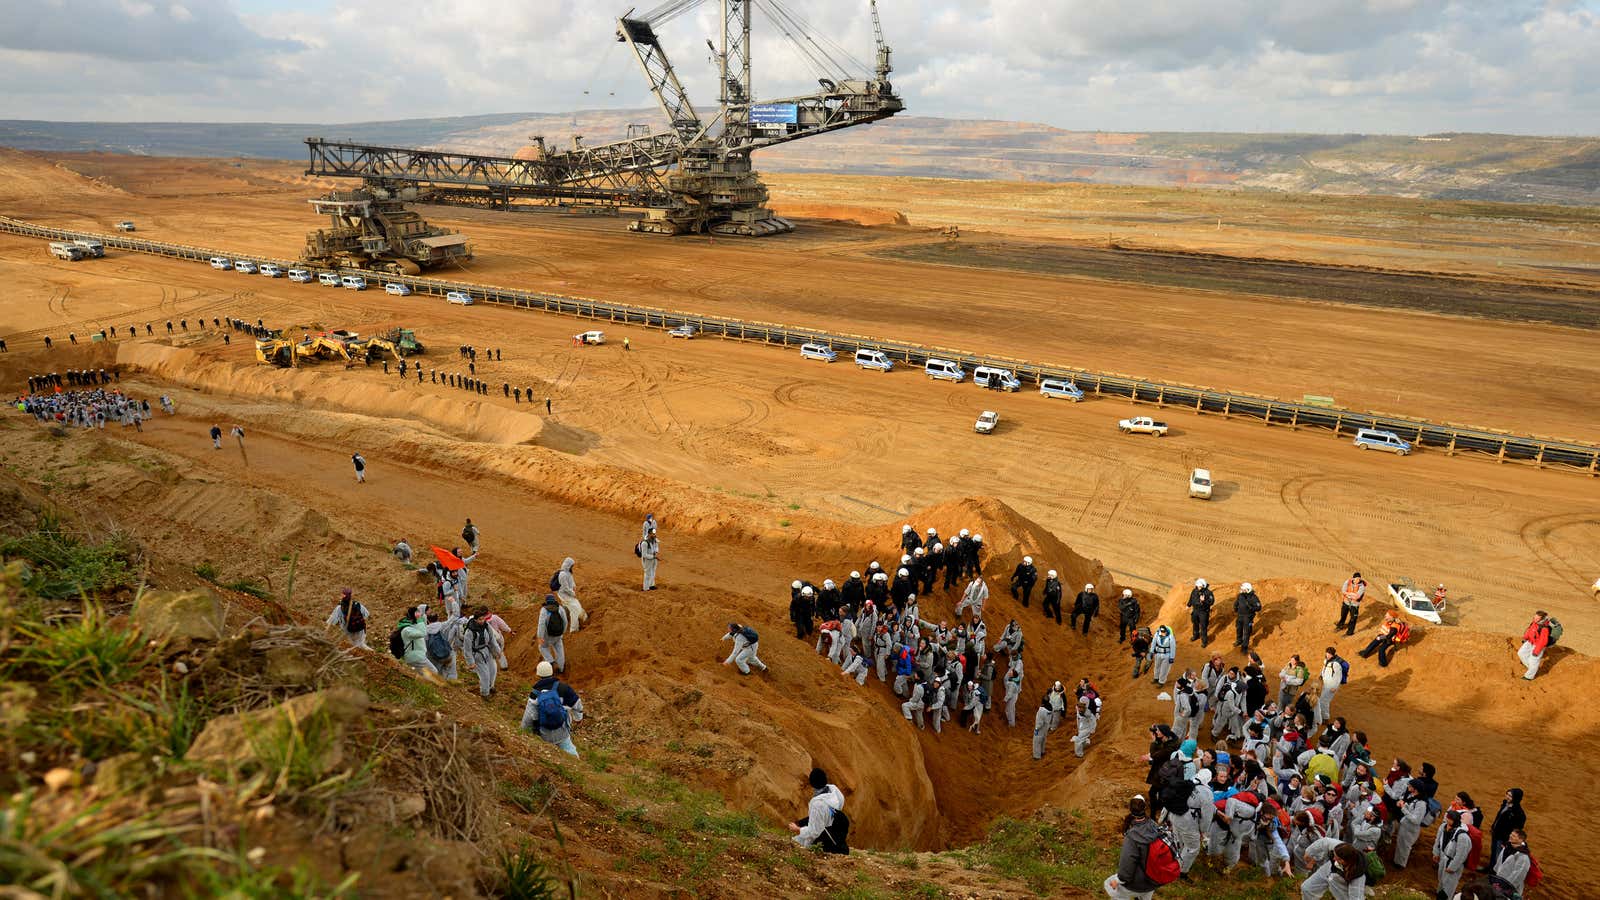 “Ende Gelände” activists prepare to storm mines in Hambach on Sunday.